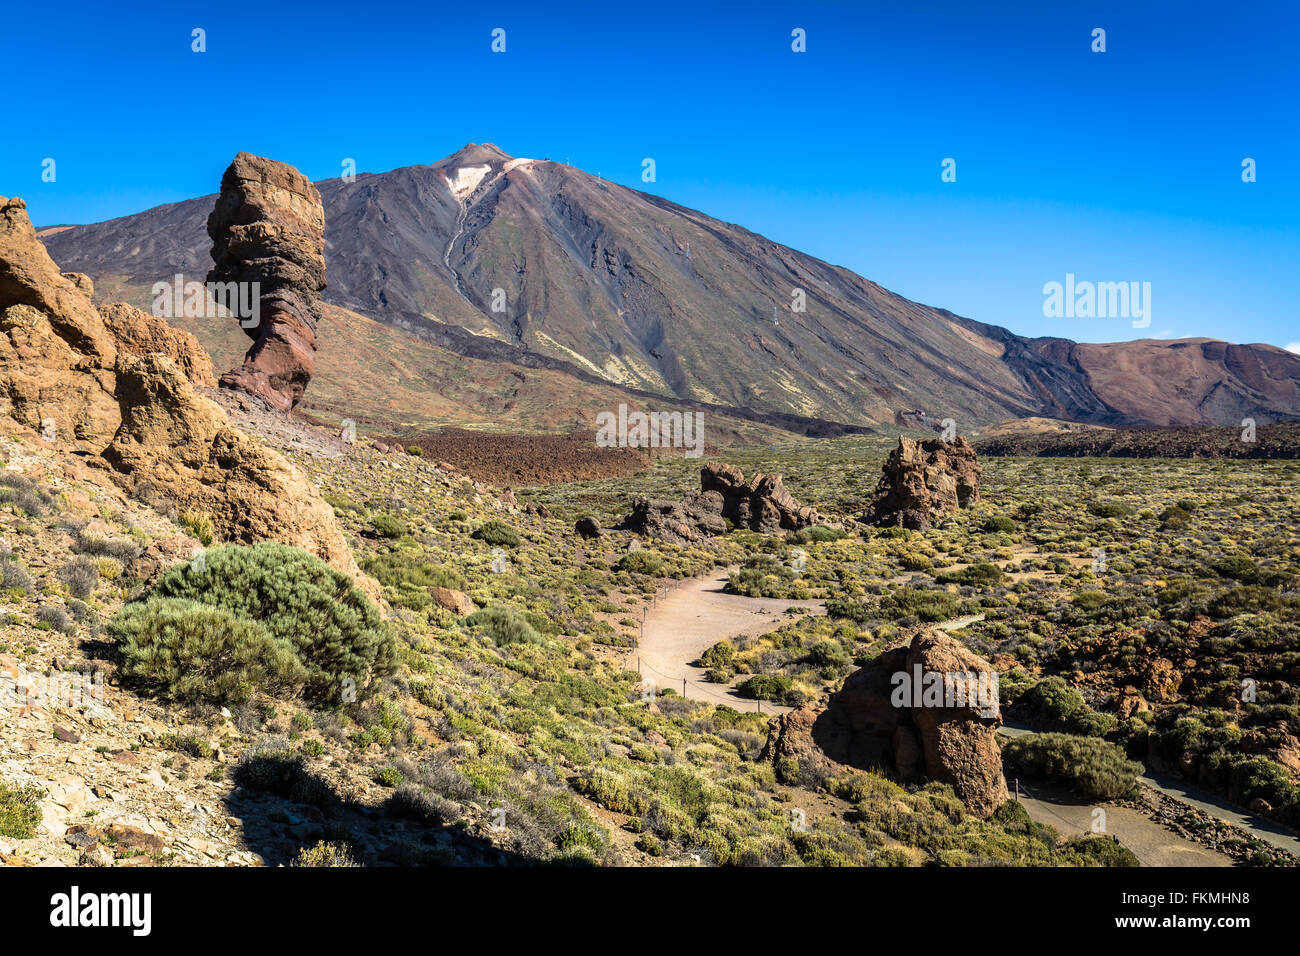 Volcano Pico del Teide, El Teide national park, Tenerife, Canary Islands, Spain Stock Photo